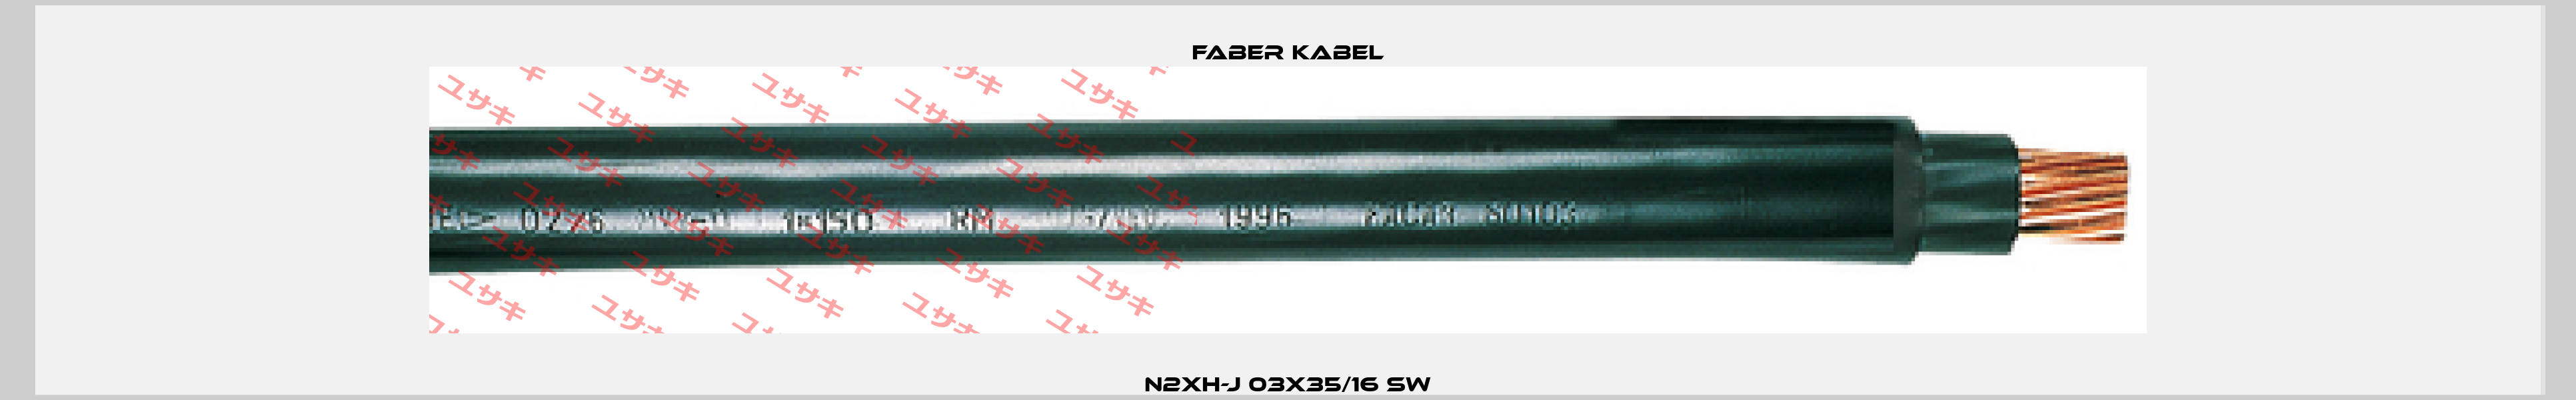 N2XH-J 03X35/16 SW Faber Kabel